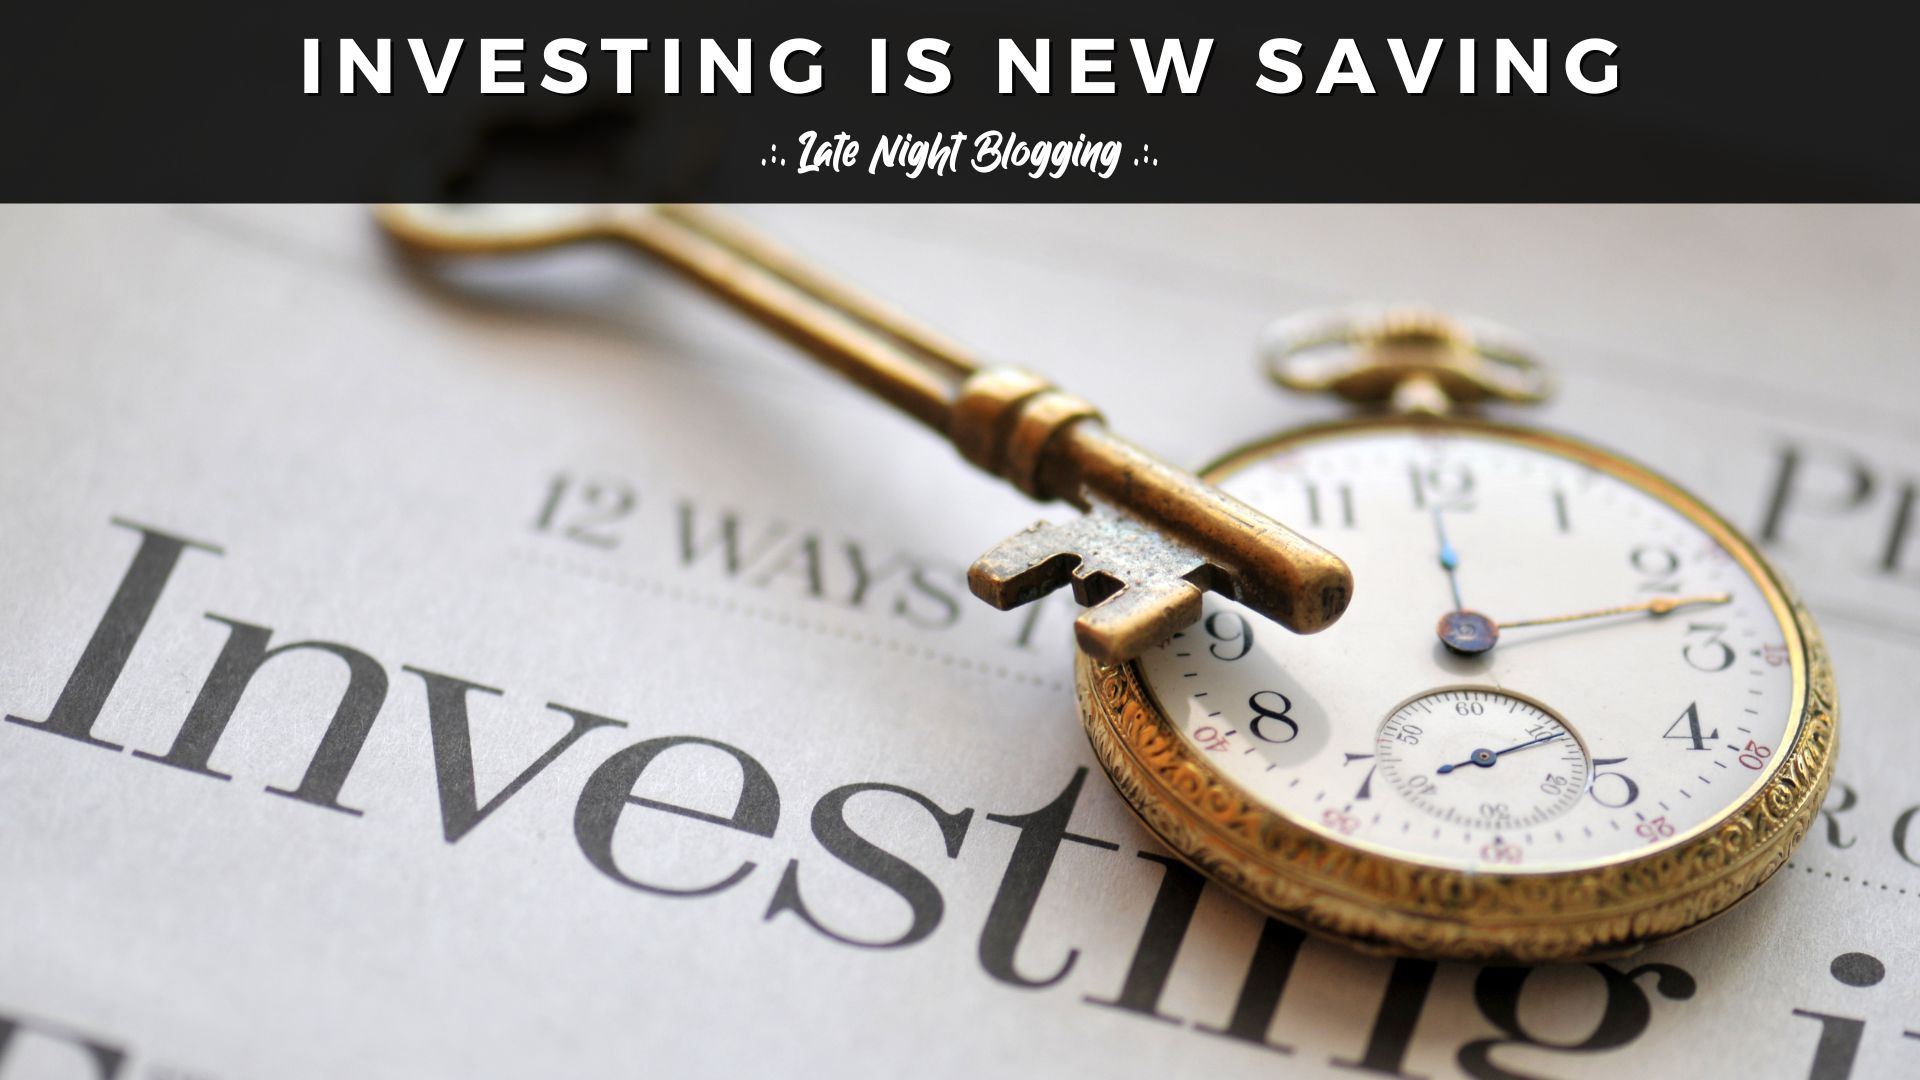 @ph1102/investing-is-new-saving-late-night-blogging